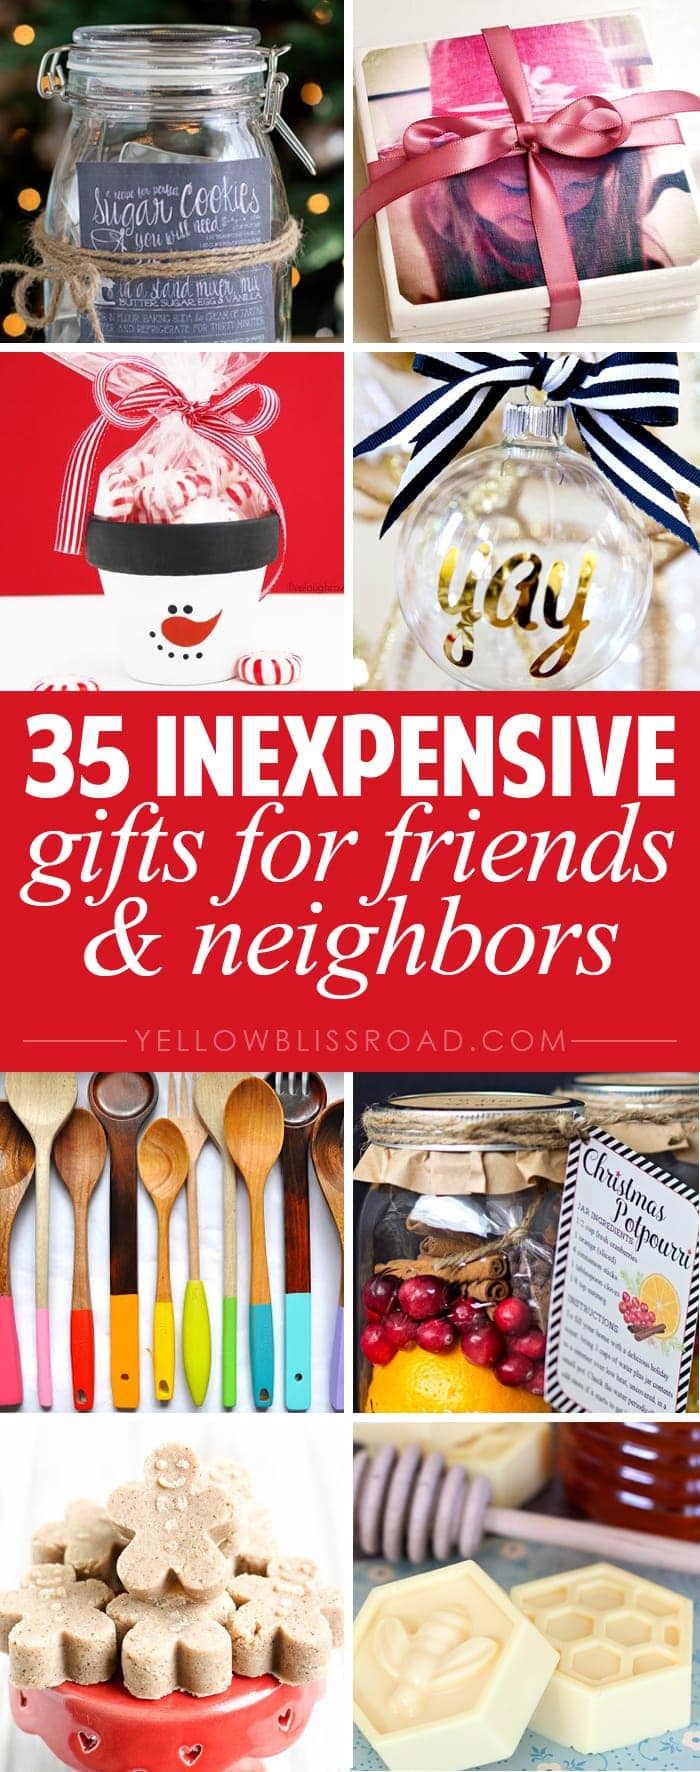 https://www.yellowblissroad.com/wp-content/uploads/2015/10/35-Inexpensive-Gifts-for-Friends-Neighbors.jpg